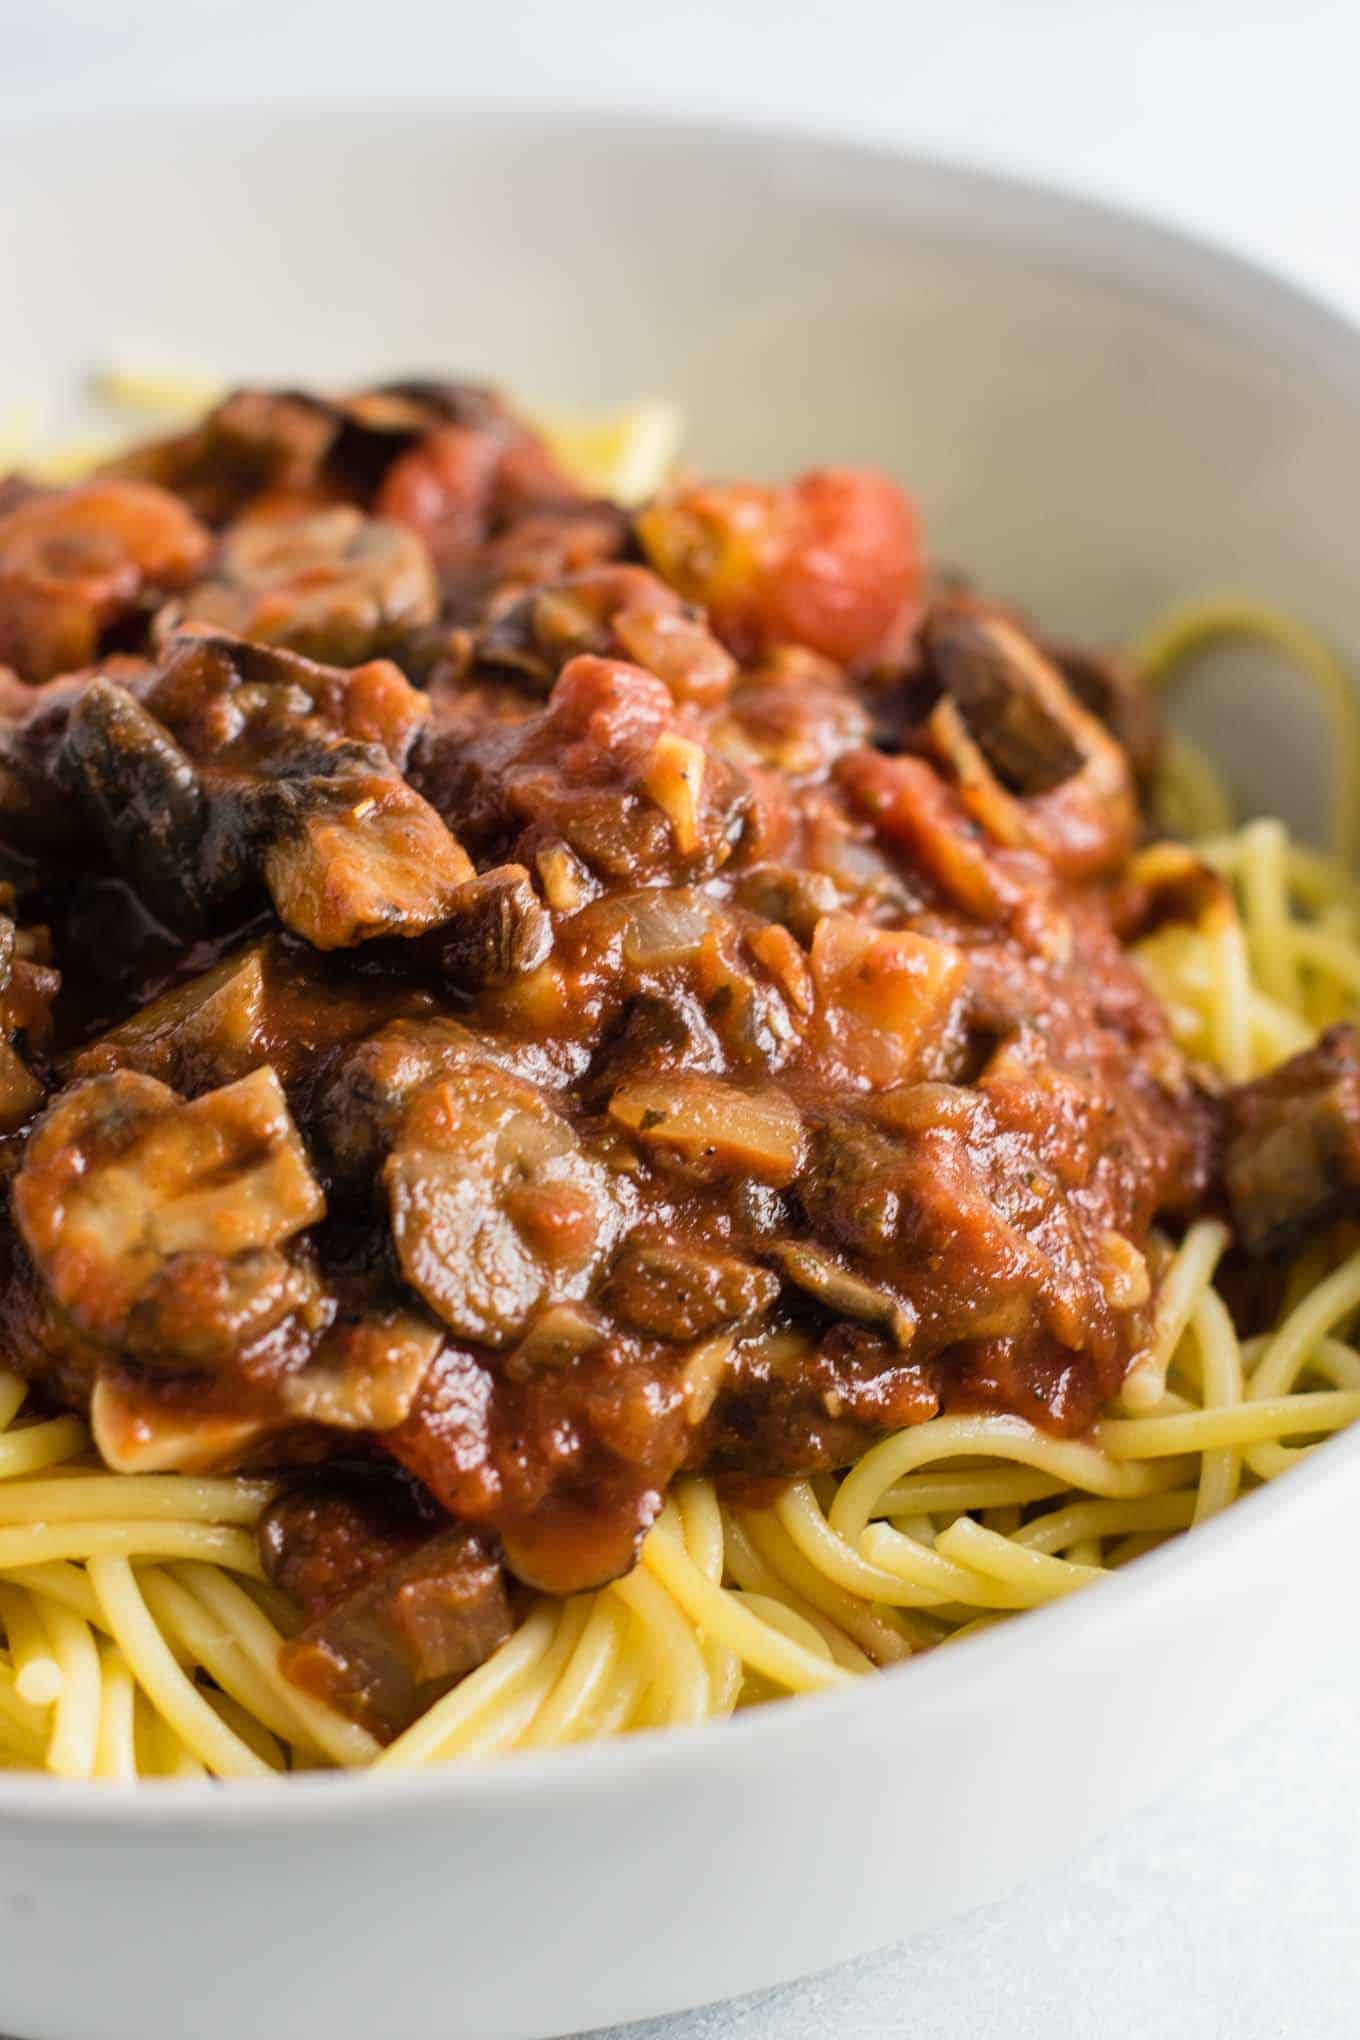 vegan spaghetti sauce over white spaghetti noodles in a bowl